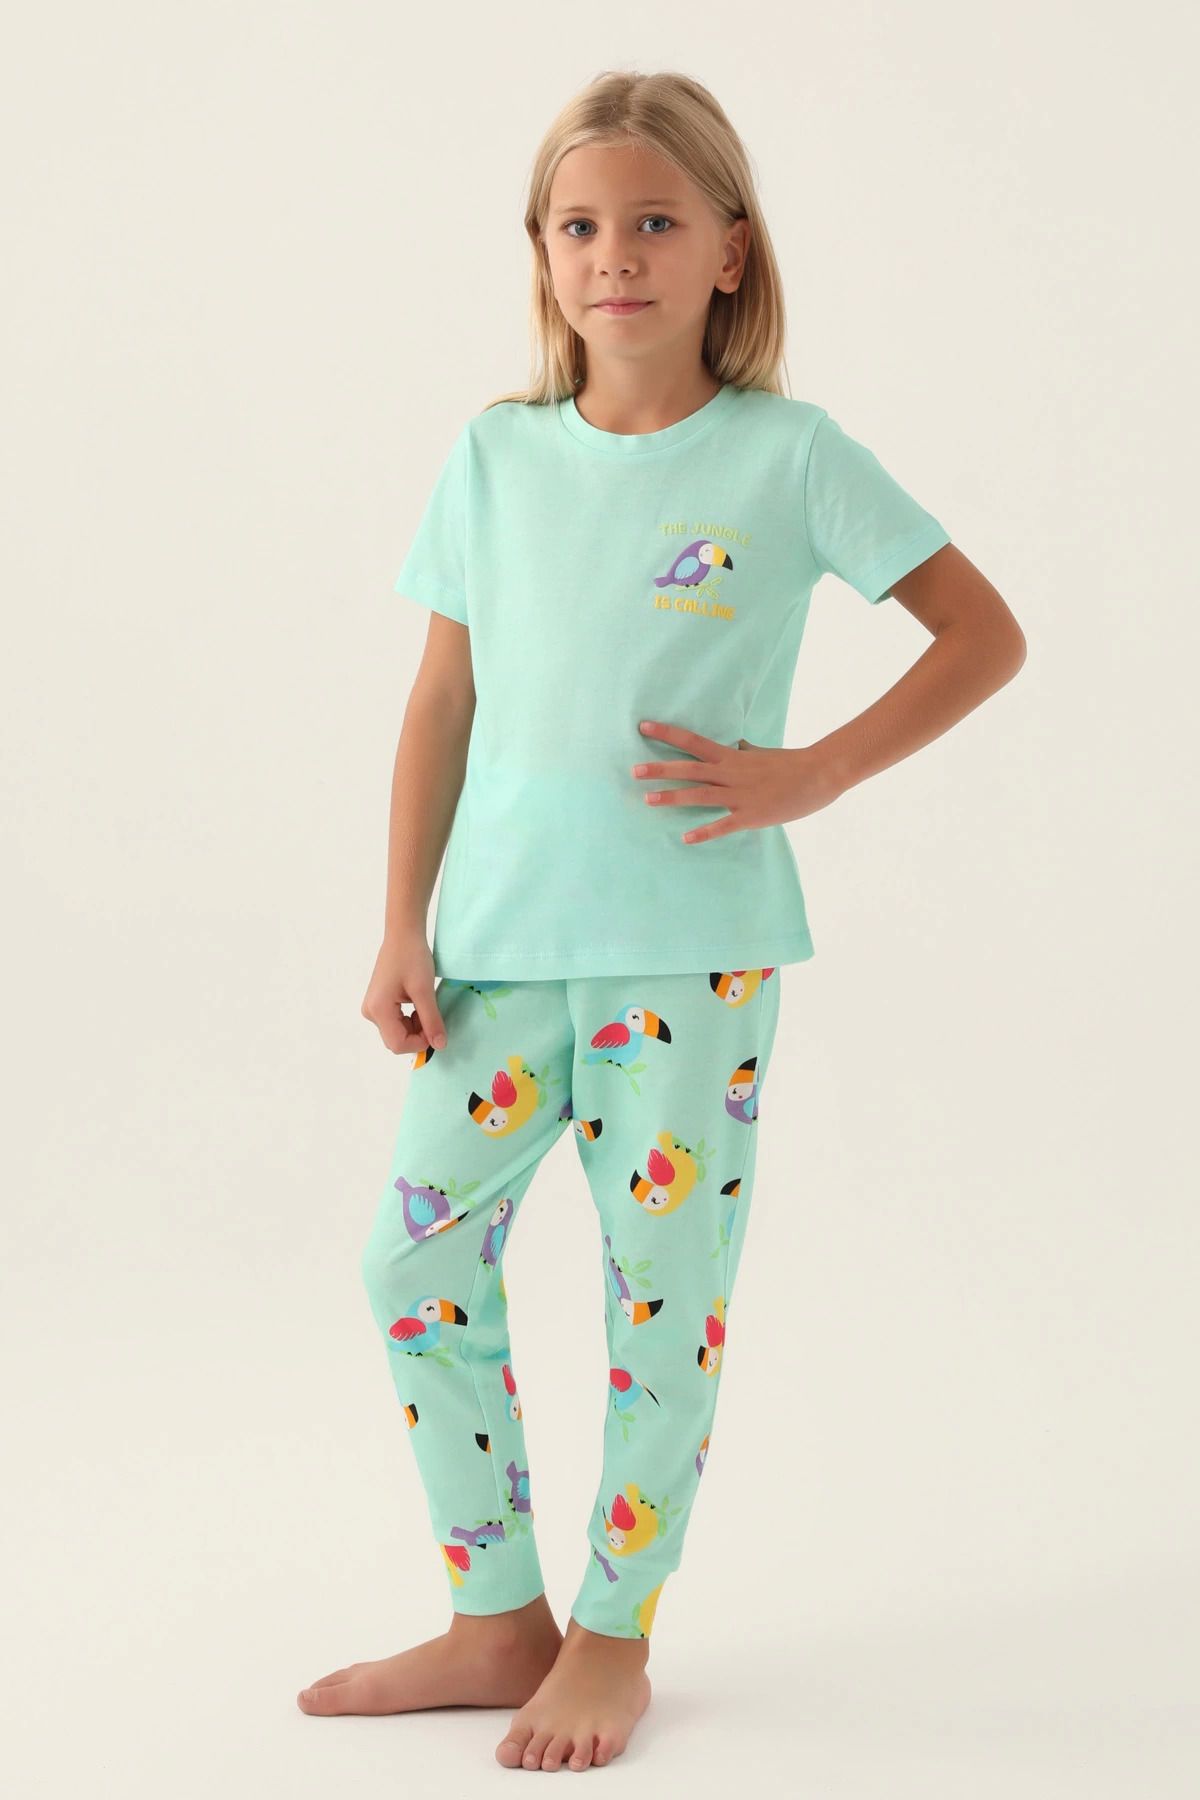 Pierre Cardin Roly Poly  3403-2 Kız Çocuk Kısa Kol Pijama Takımı